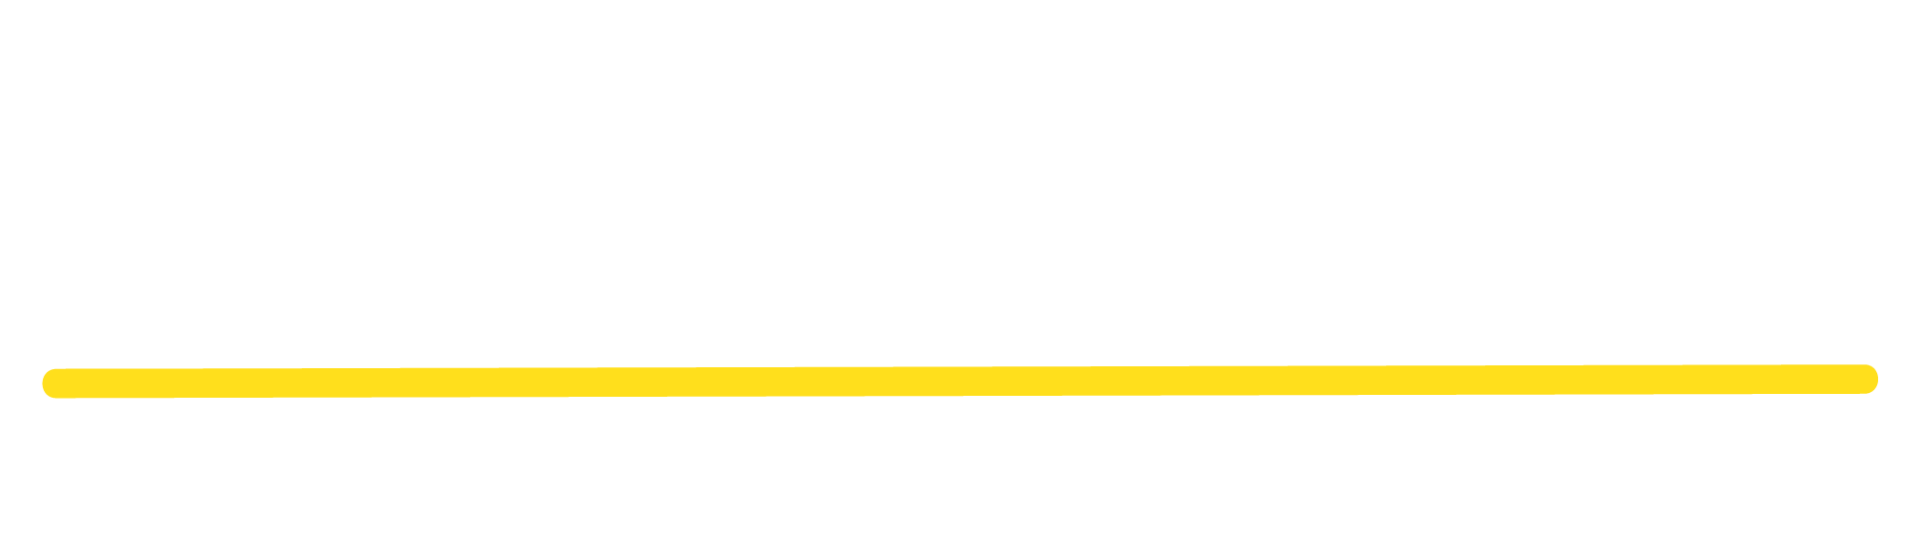 Welcome Days logo